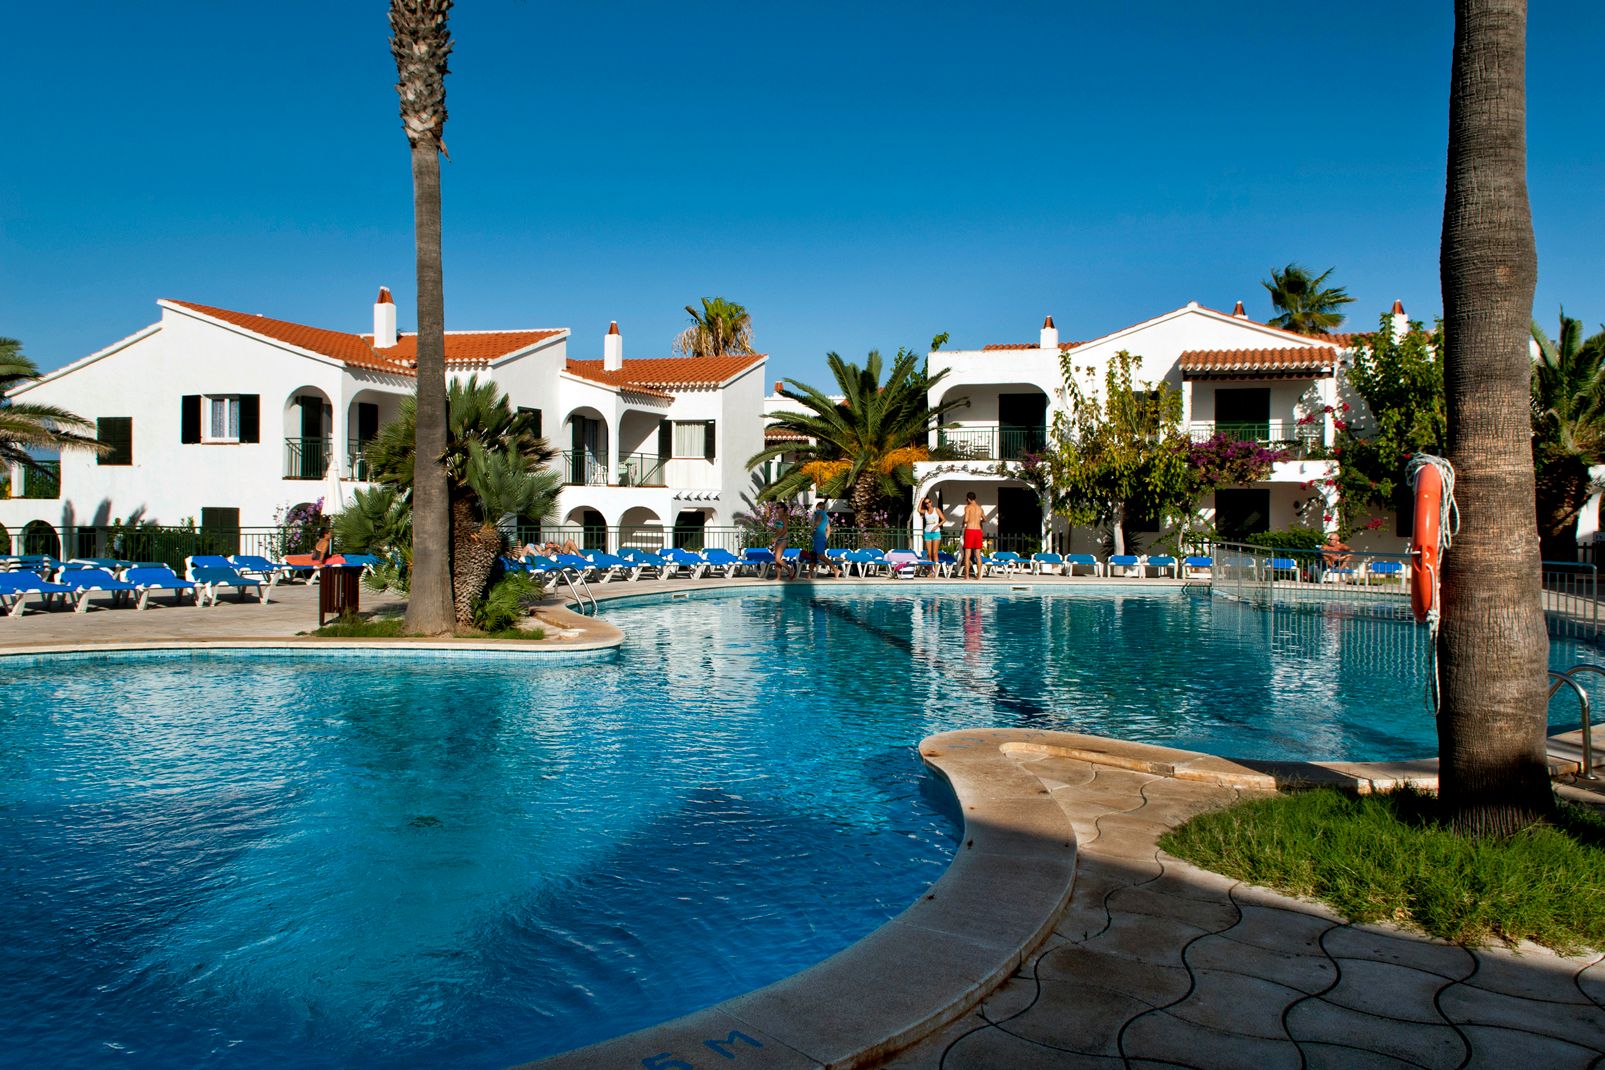 Club Marmara Oasis Menorca 3*